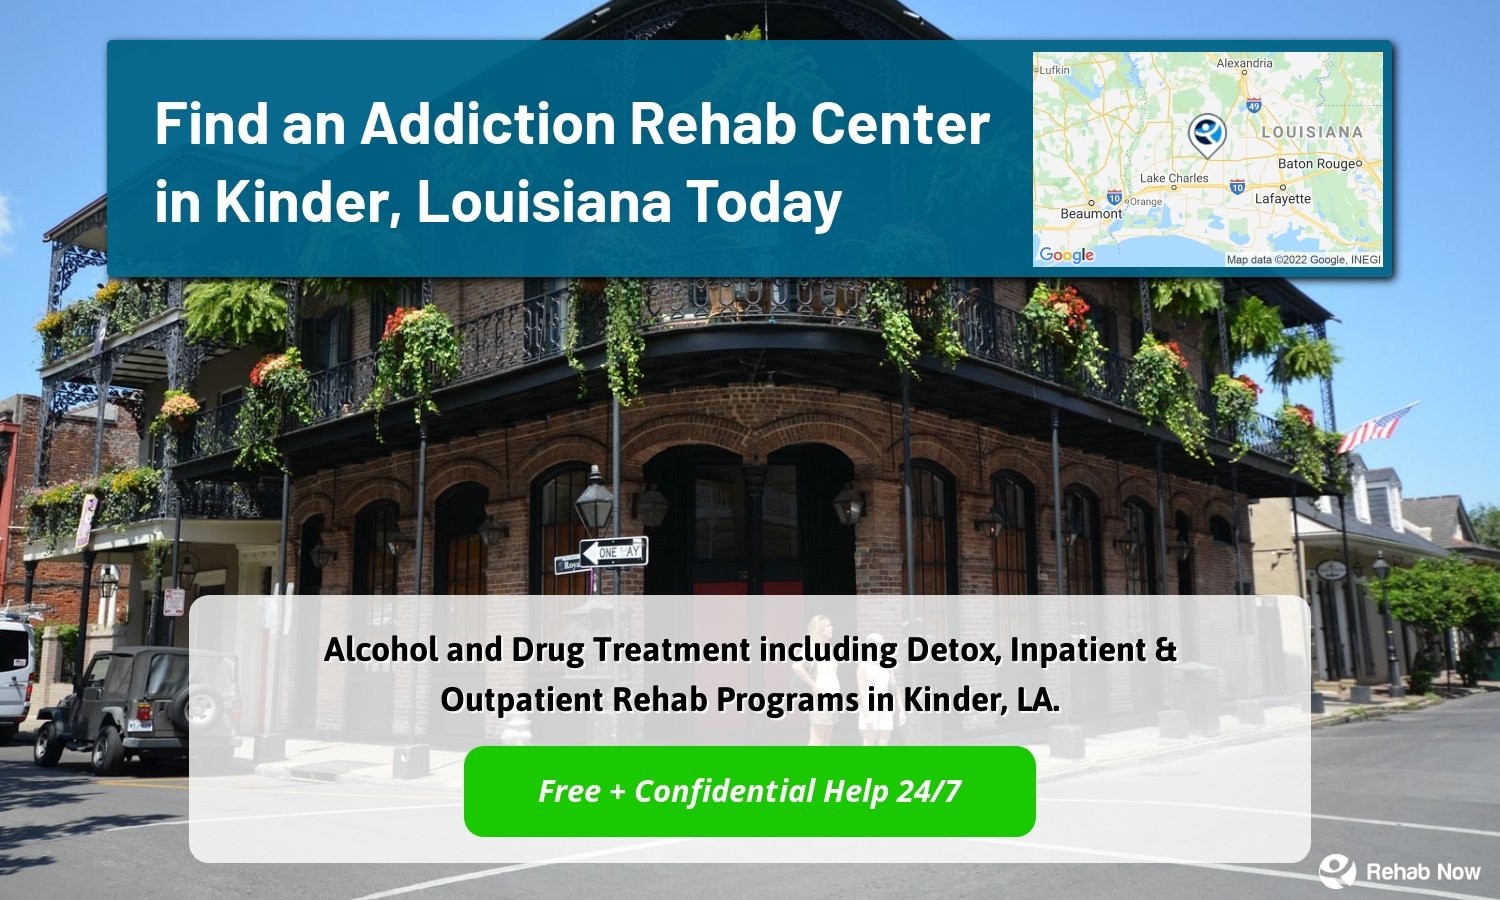 Alcohol and Drug Treatment including Detox, Inpatient & Outpatient Rehab Programs in Kinder, LA.